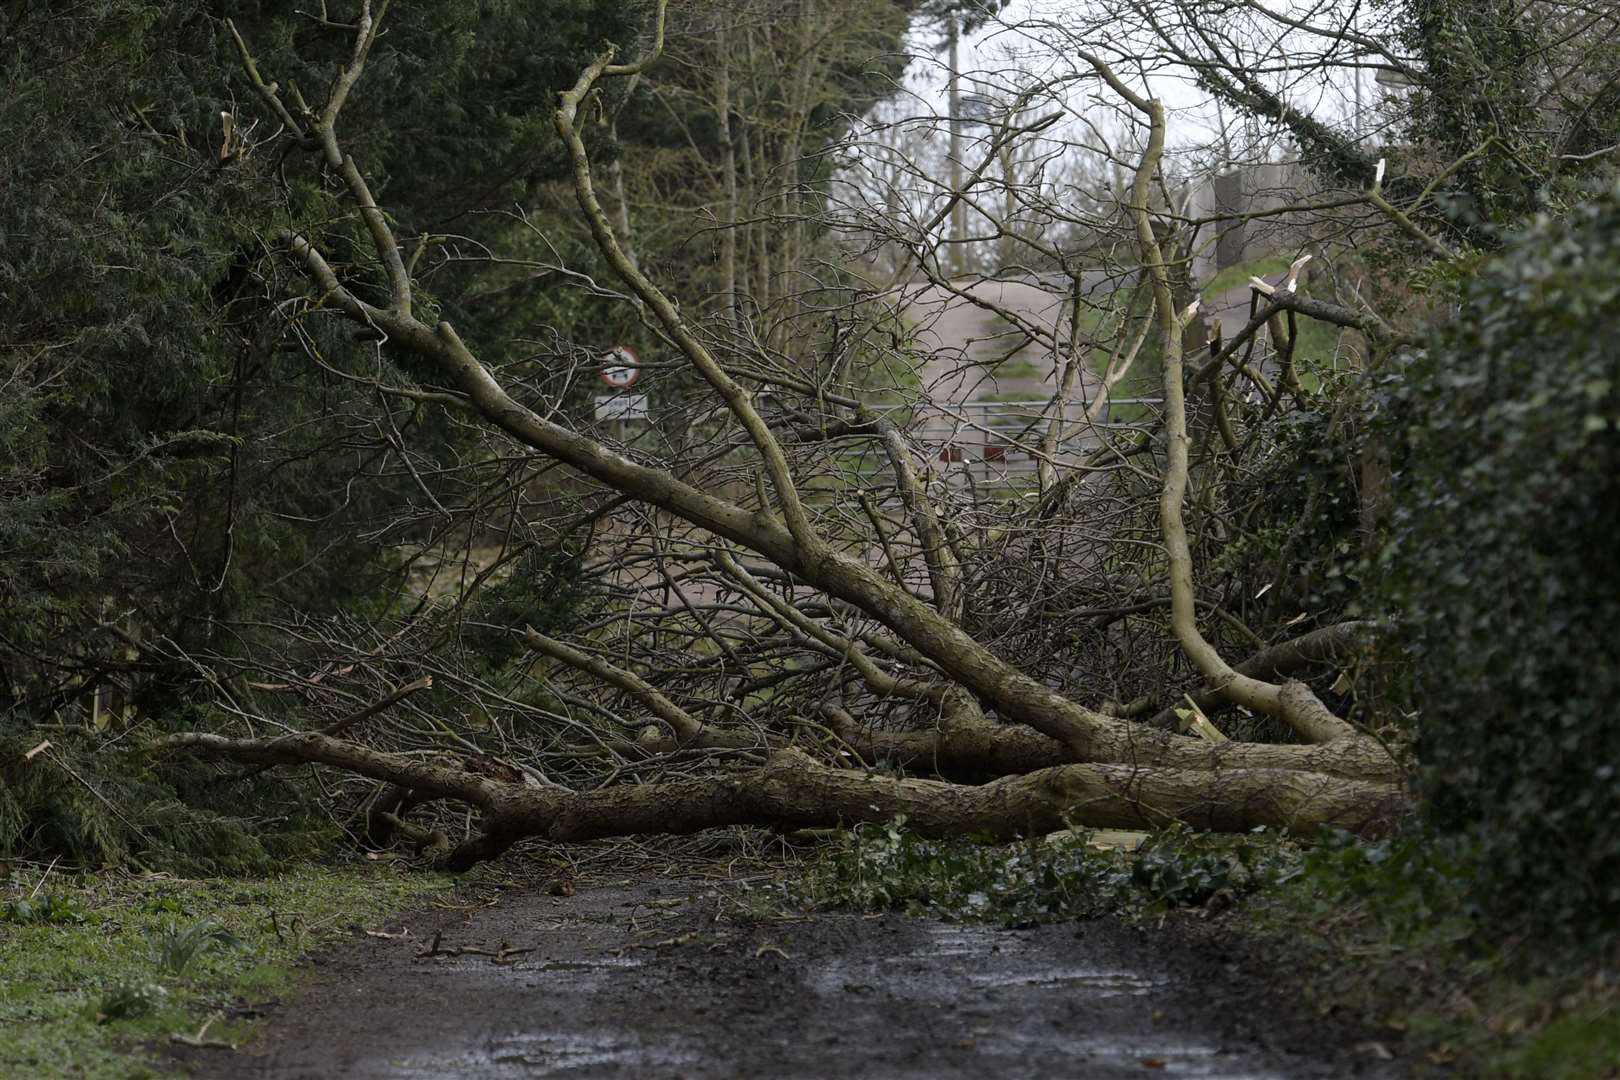 Fallen tree blocks the public footpath to Westenhanger railway station yesterday - a scene replicated across Kent. Picture: Barry Goodwin